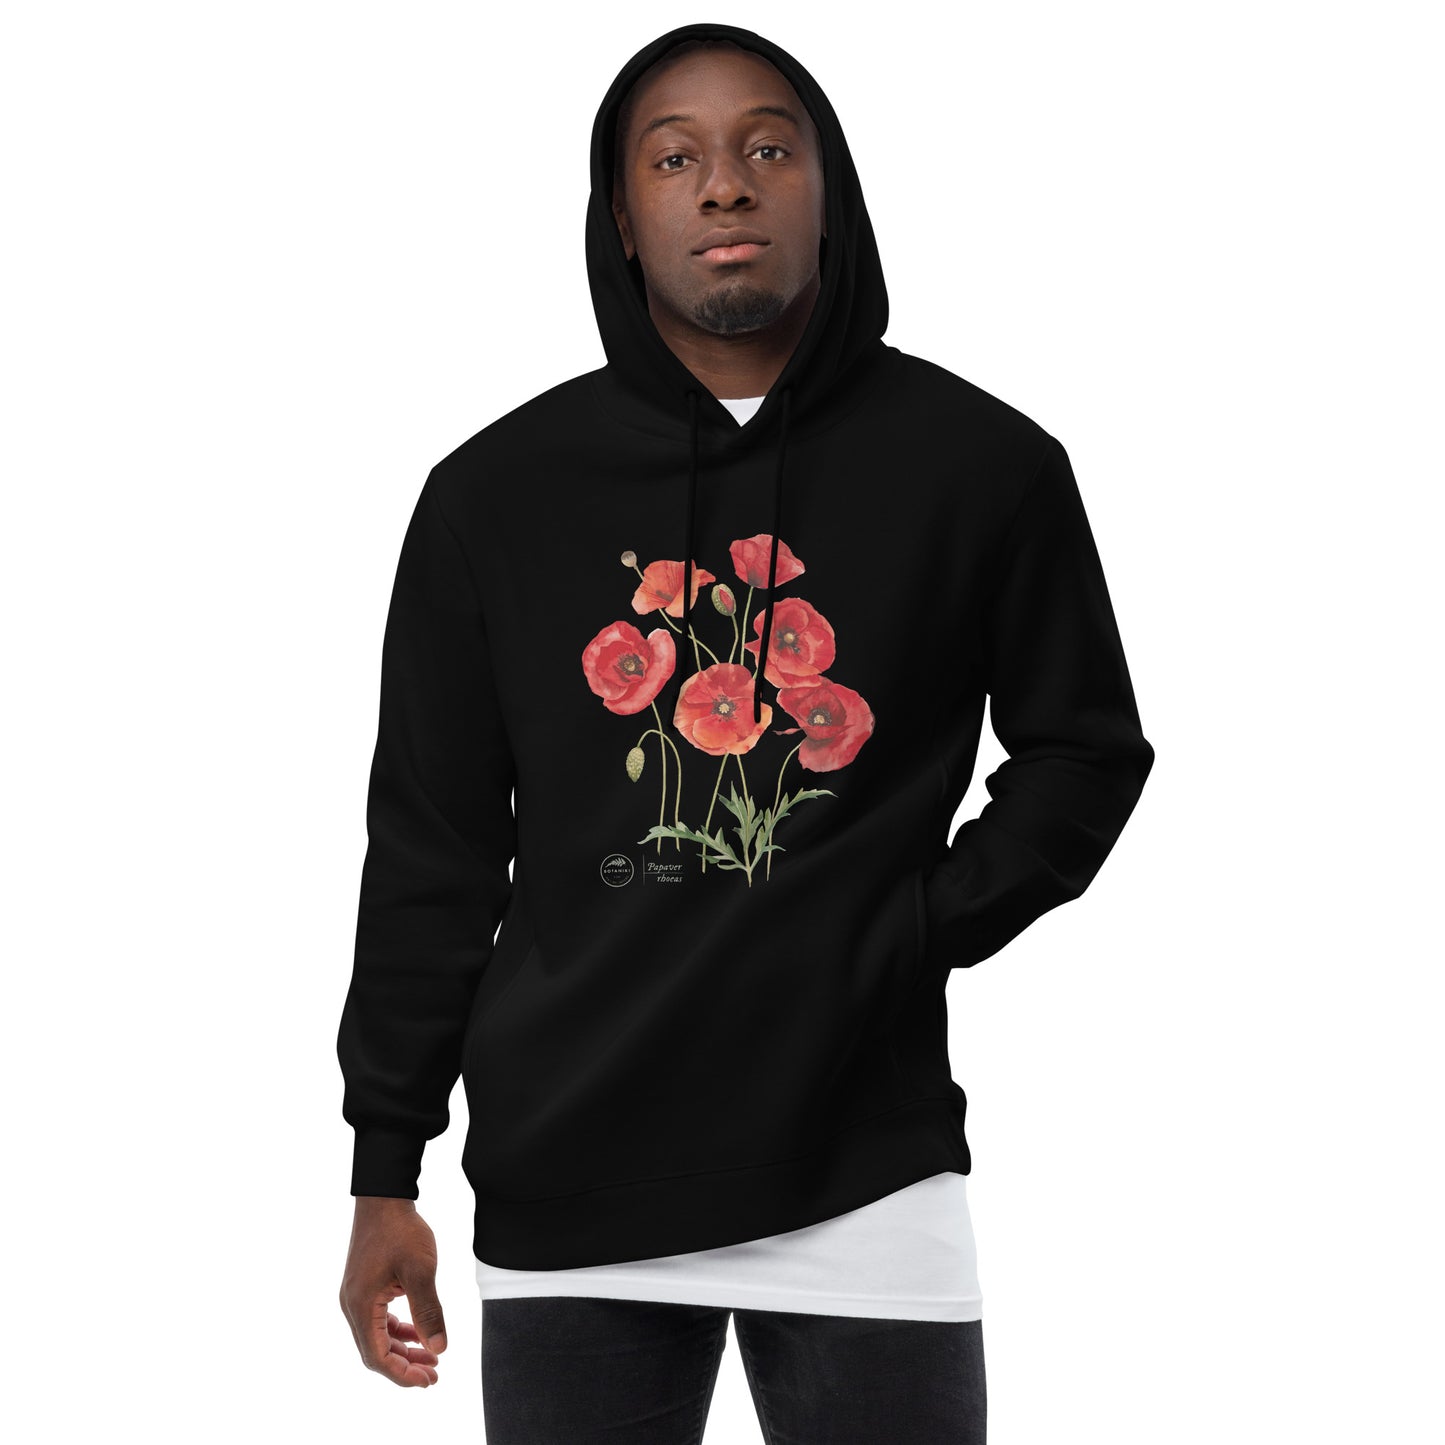 Unisex fashion hoodie - Poppies